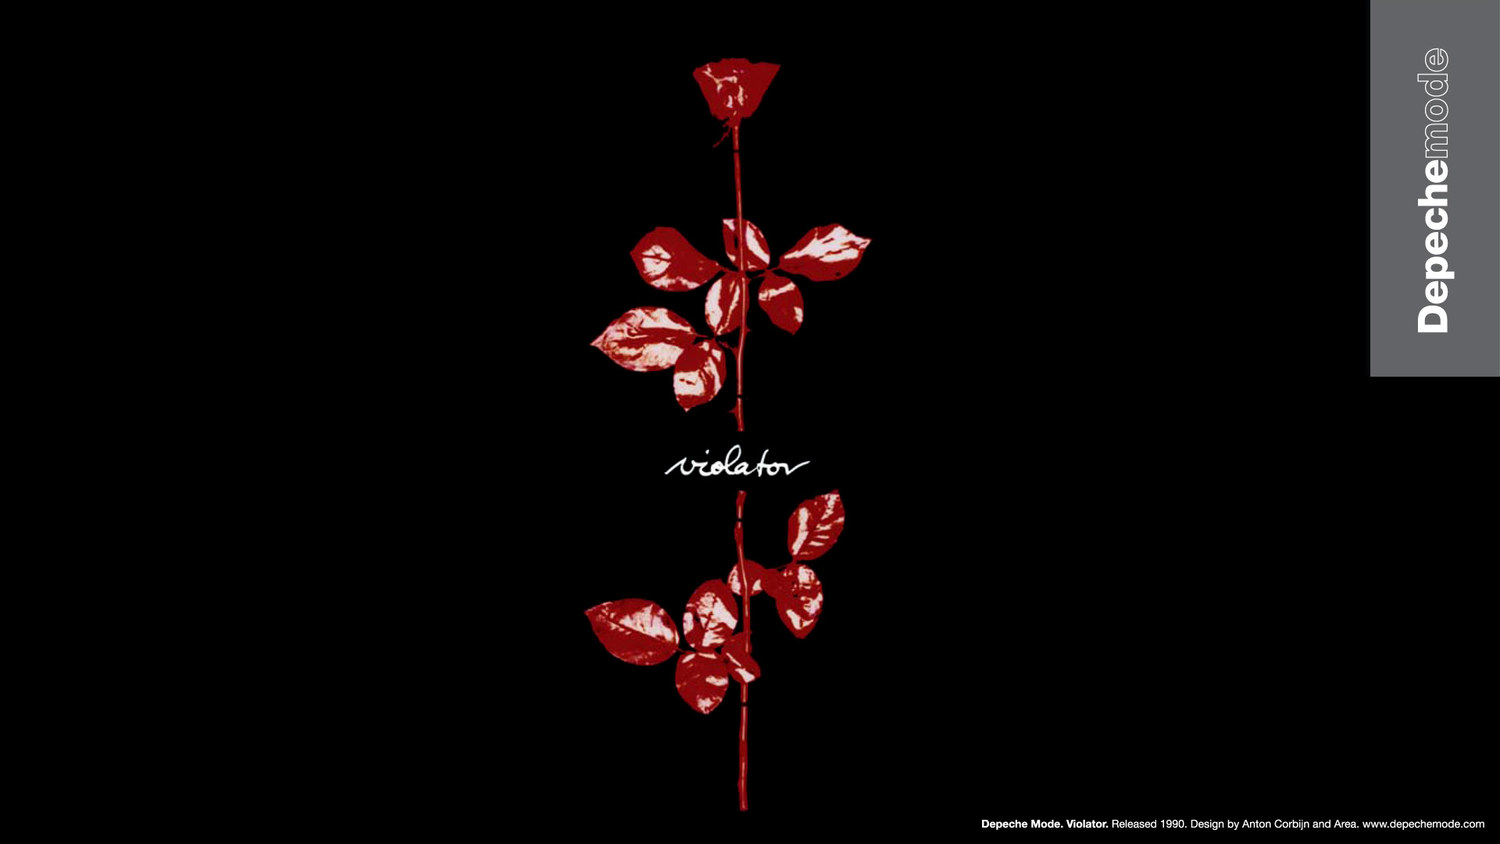 Depeche Mode Violator rose vinyl sticker decal new wave alternative Gore Gahan 